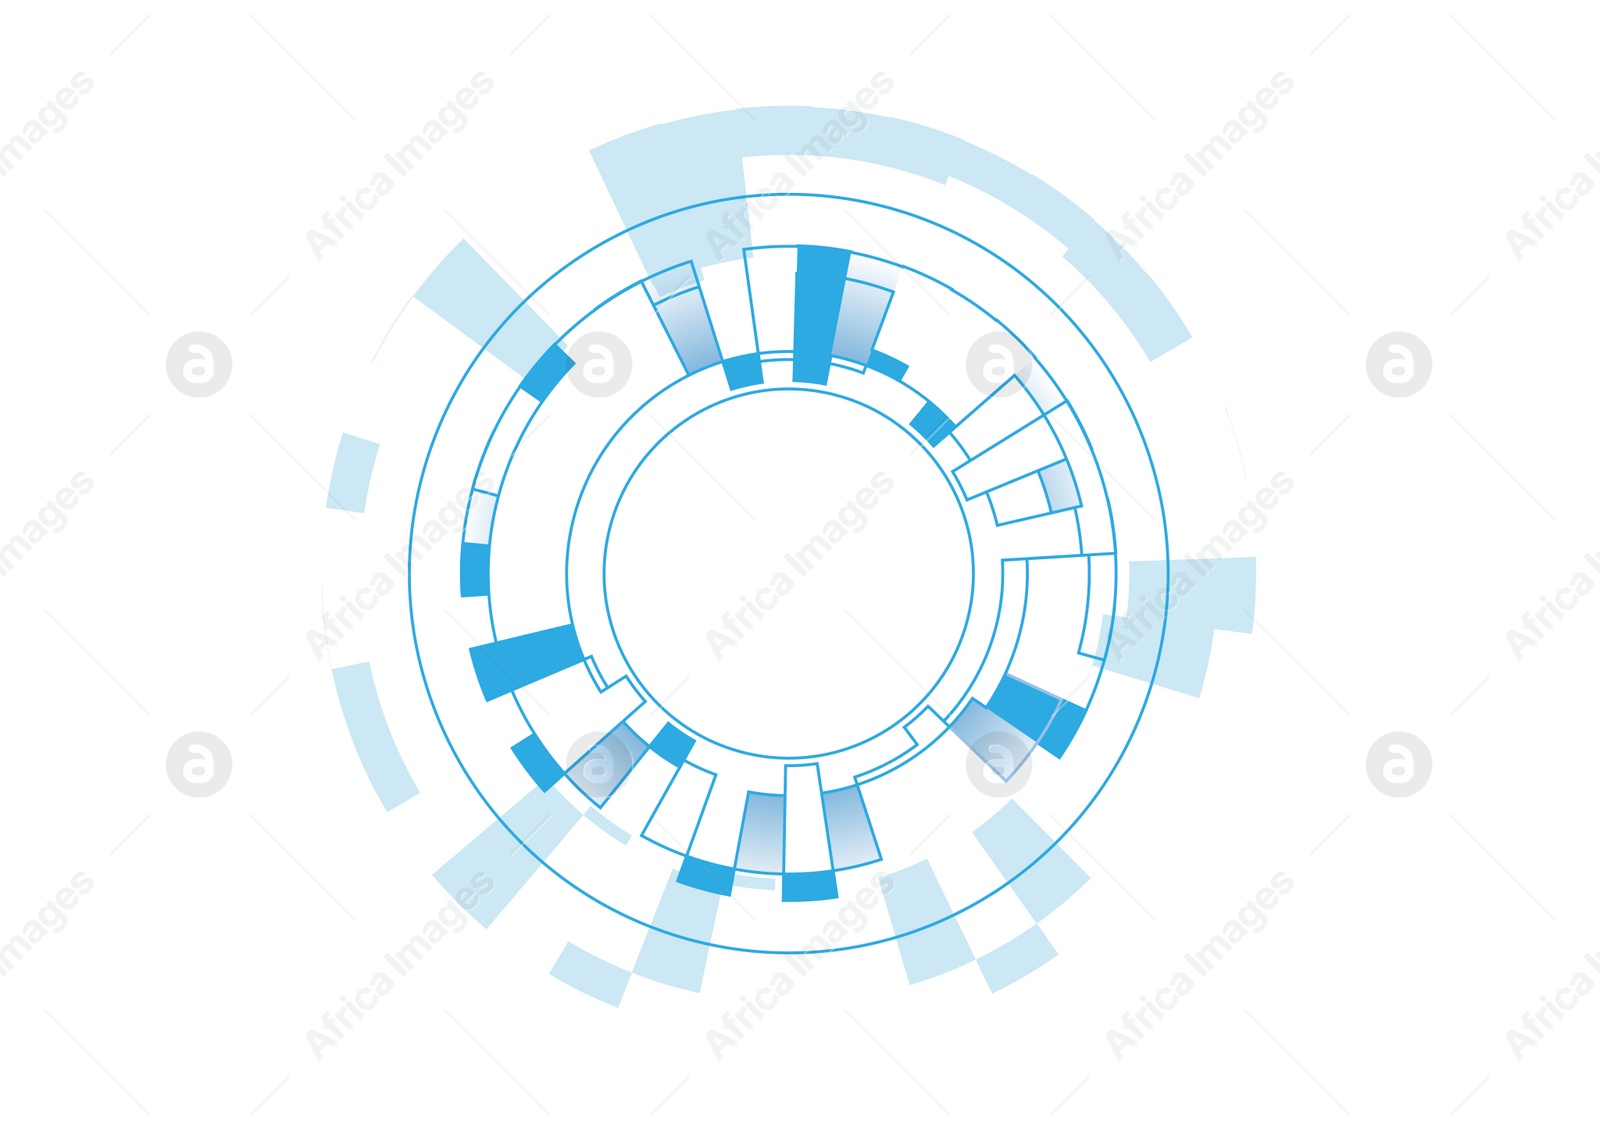 Illustration of Circle scheme or diagram, futuristic technology. Digital illustration